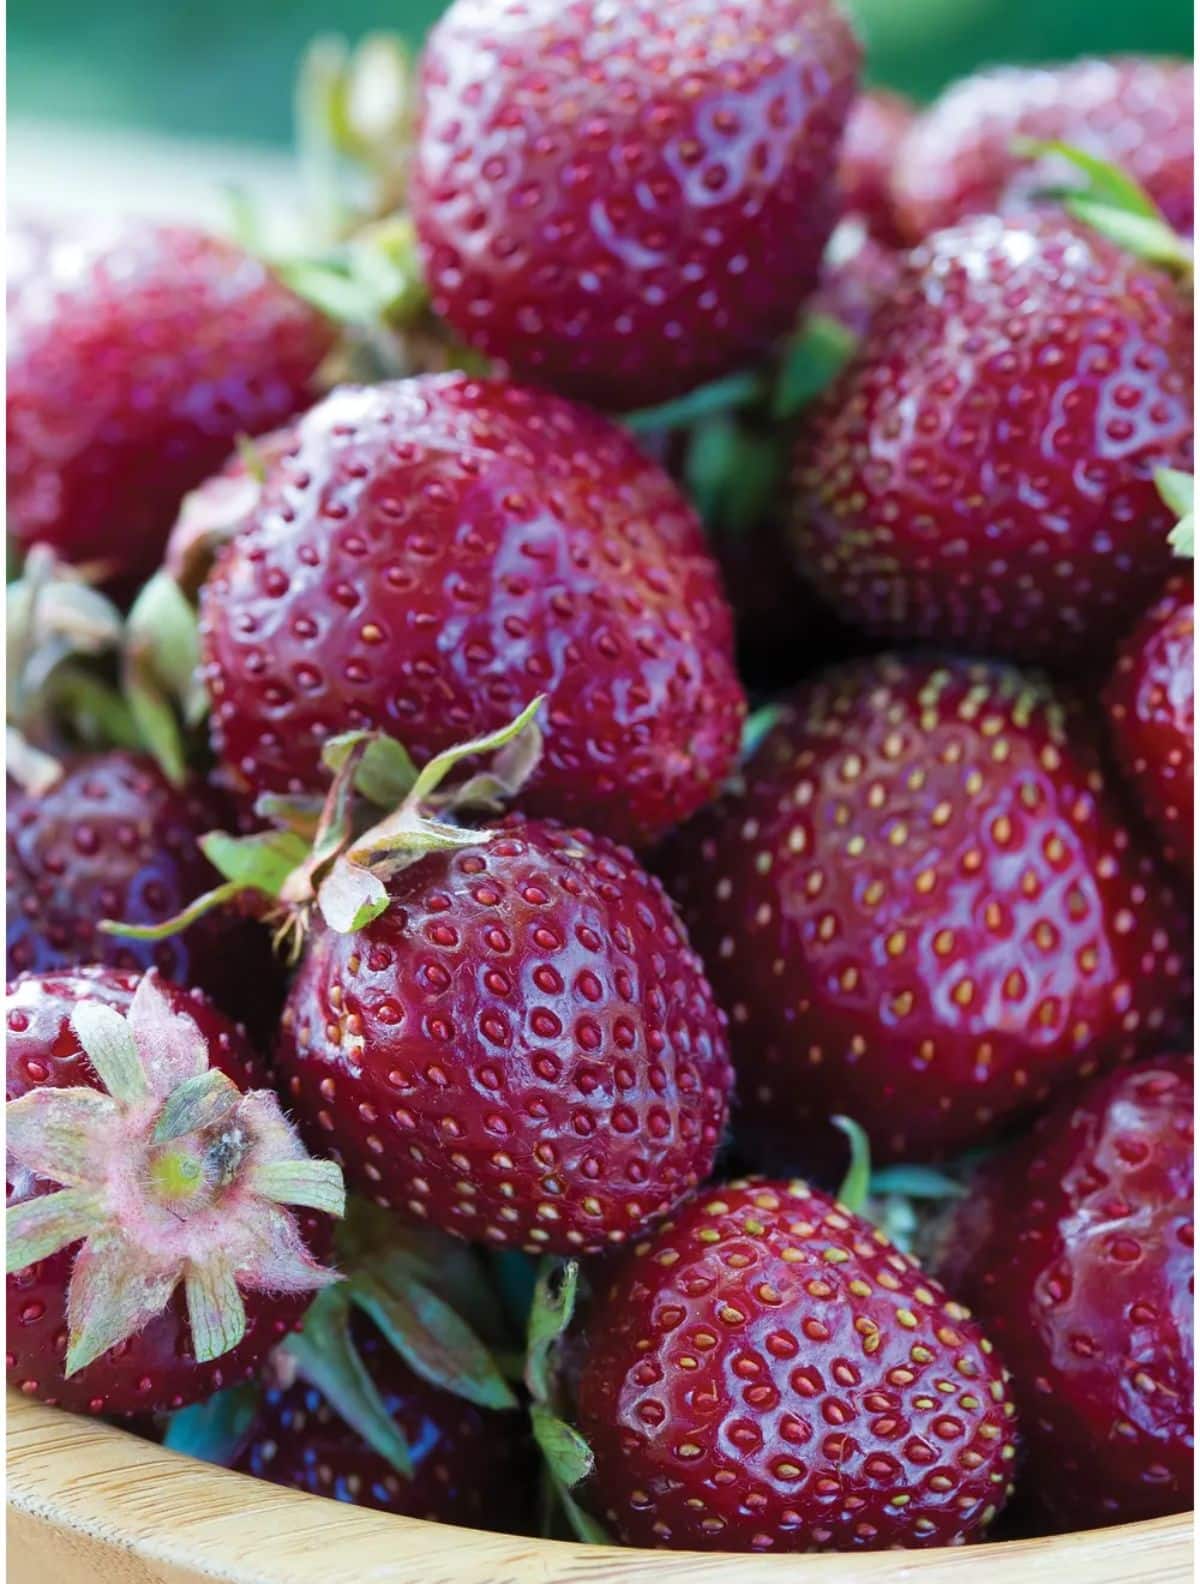 Bowl full of ripe fresh purple wonder strawberries.